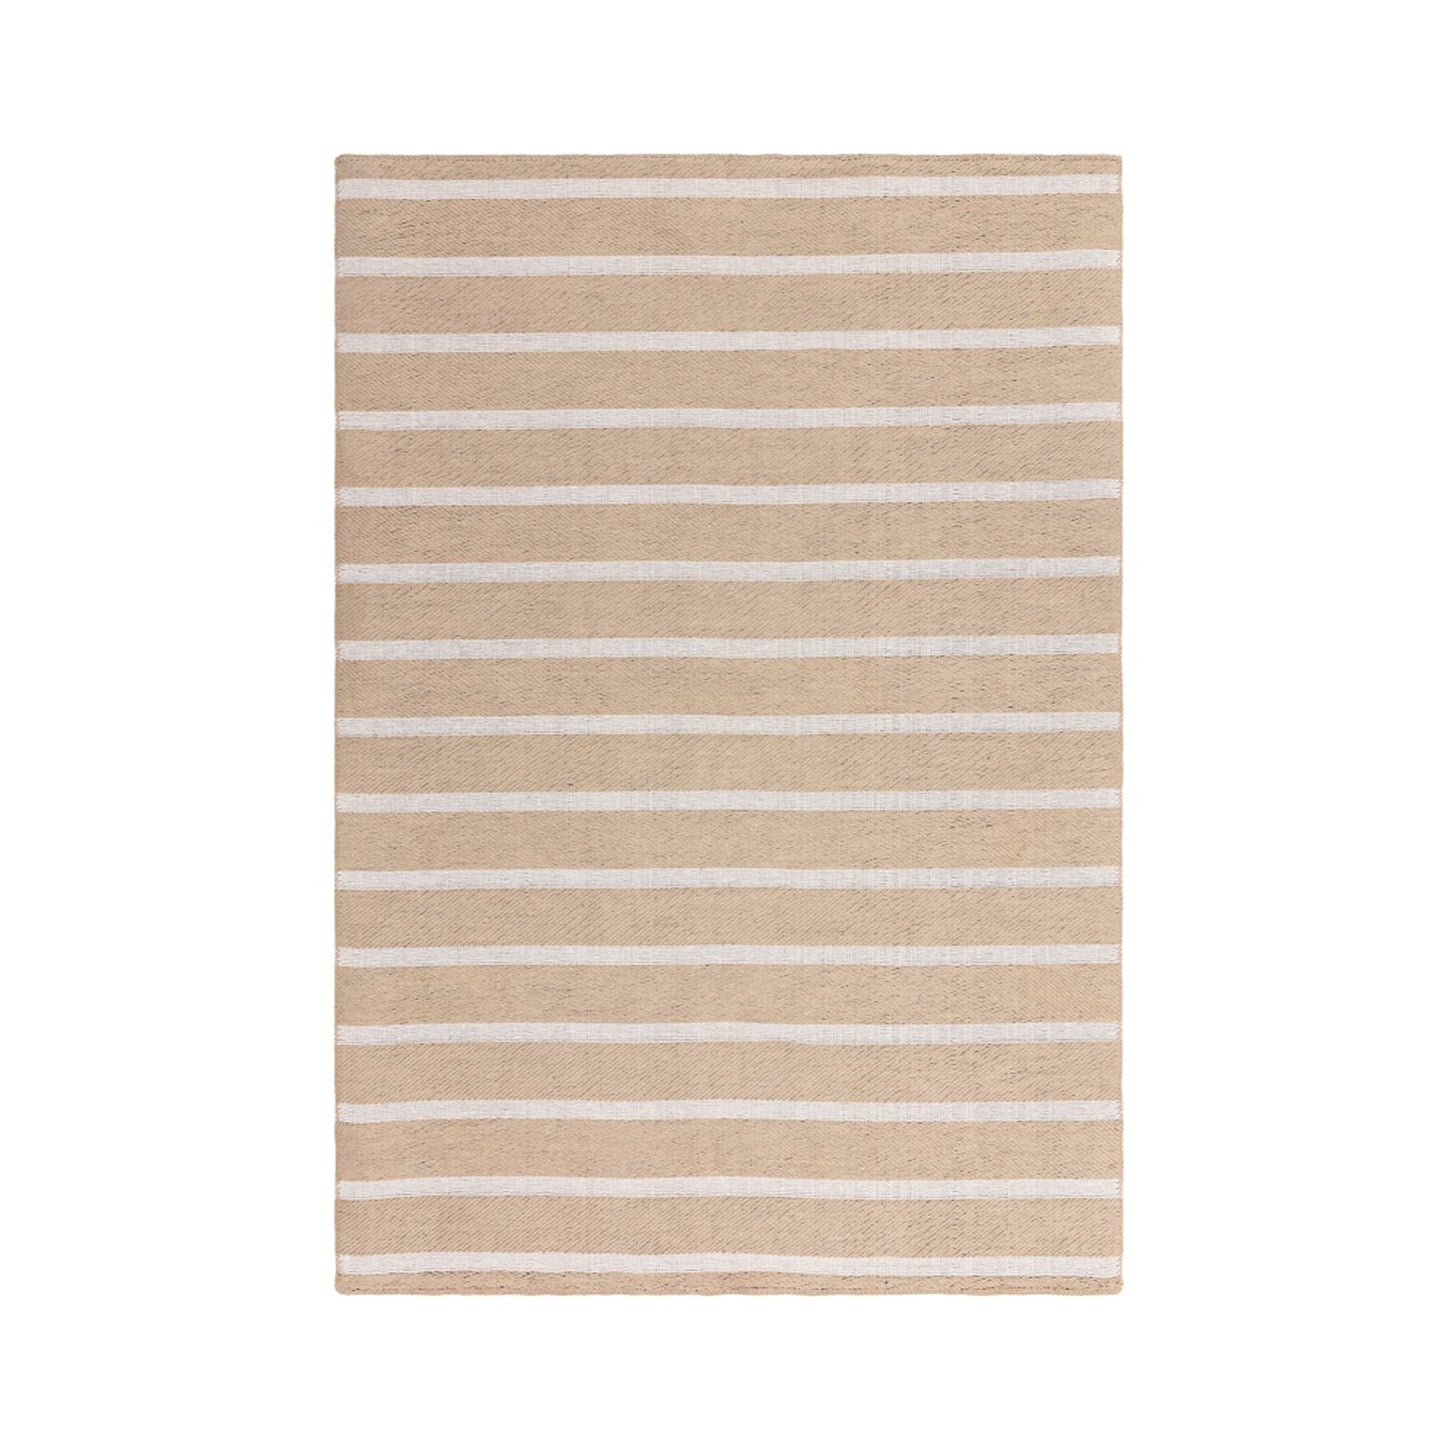 Global Floor Rug - Cream Stripe